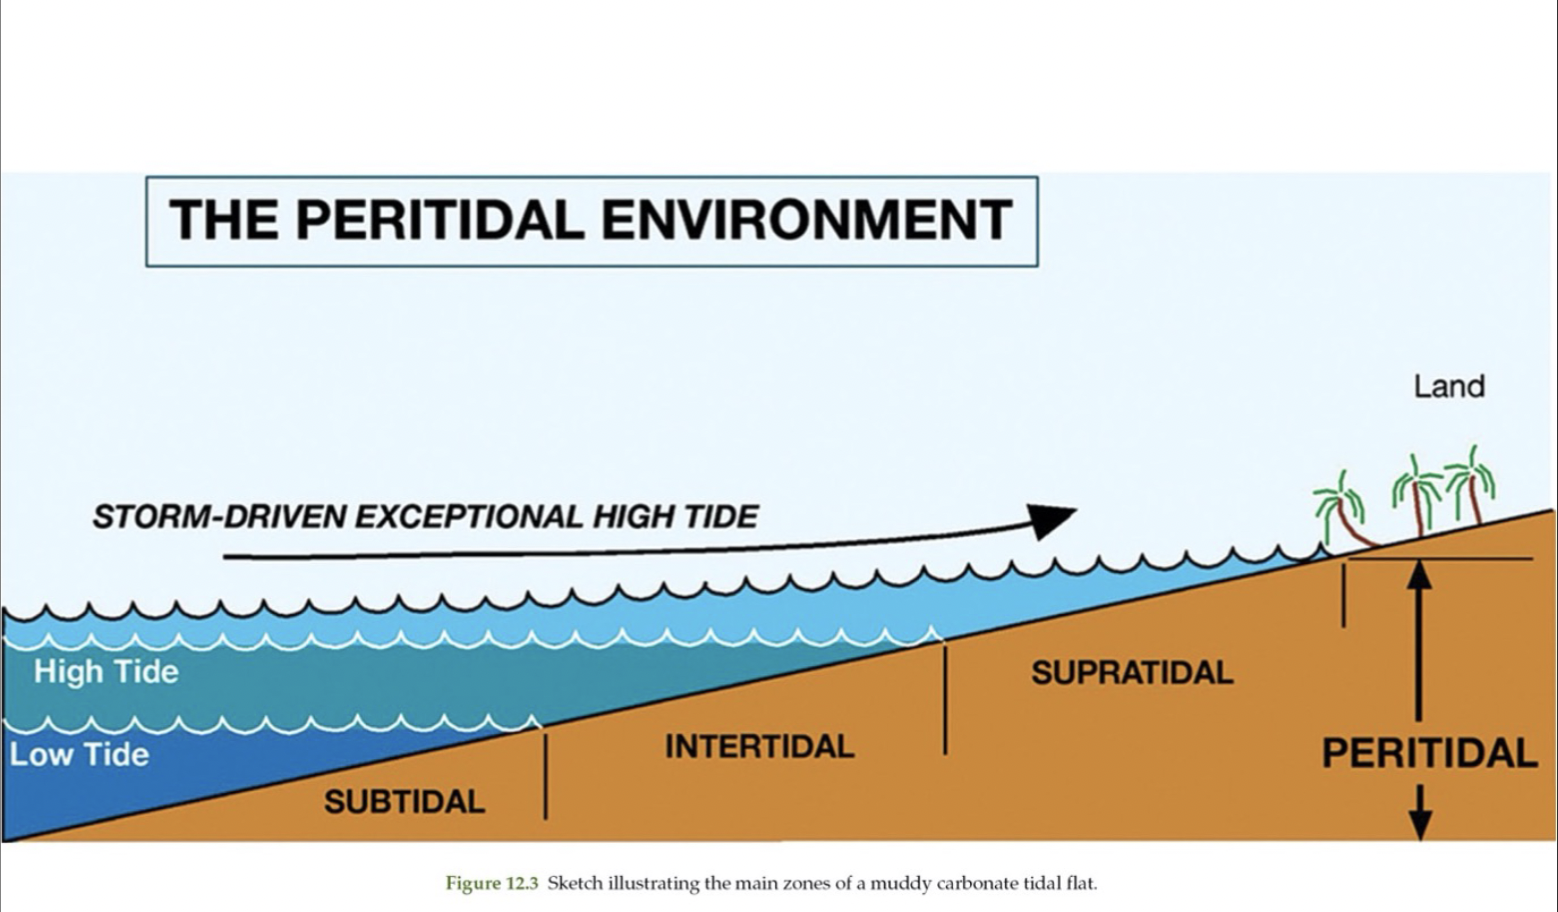 <ol><li><p>Supratidal</p></li><li><p>Intertidal</p></li><li><p>Subtidal</p></li></ol>